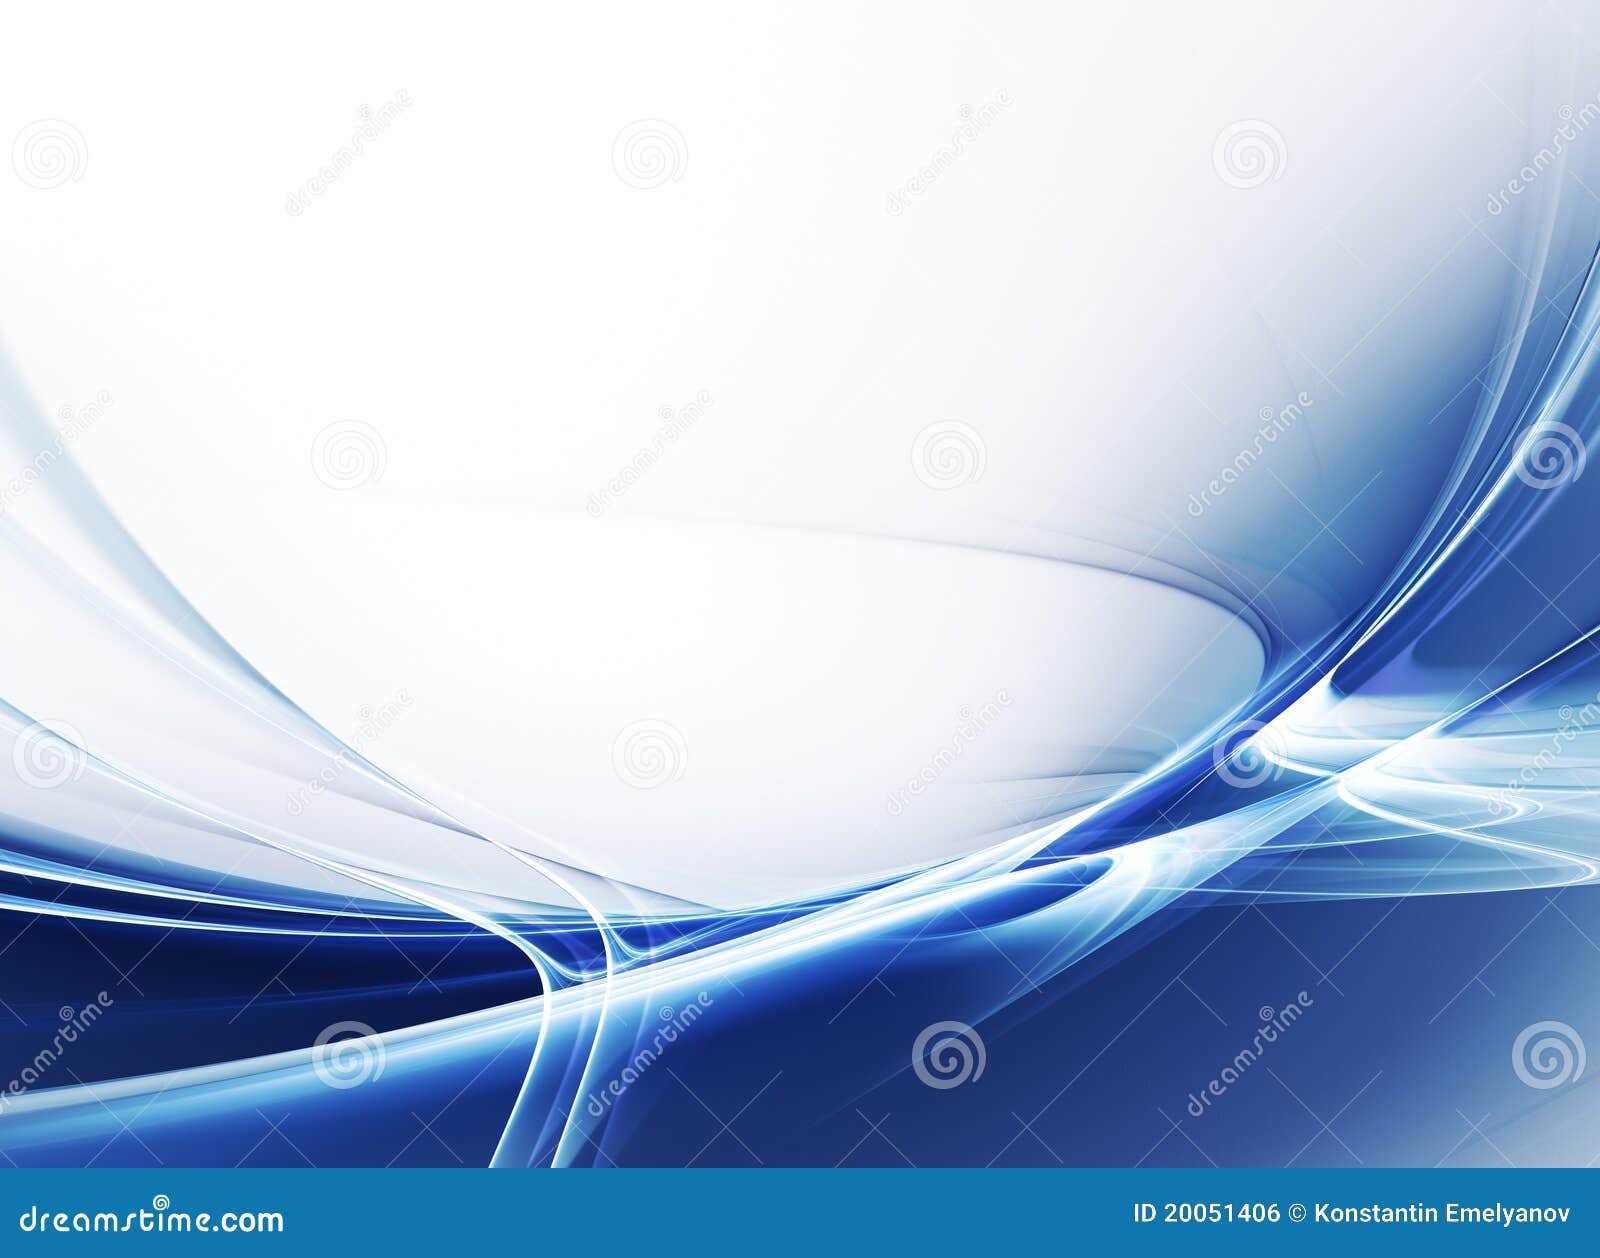 Blue And White Background Element Stock Illustration - Illustration of